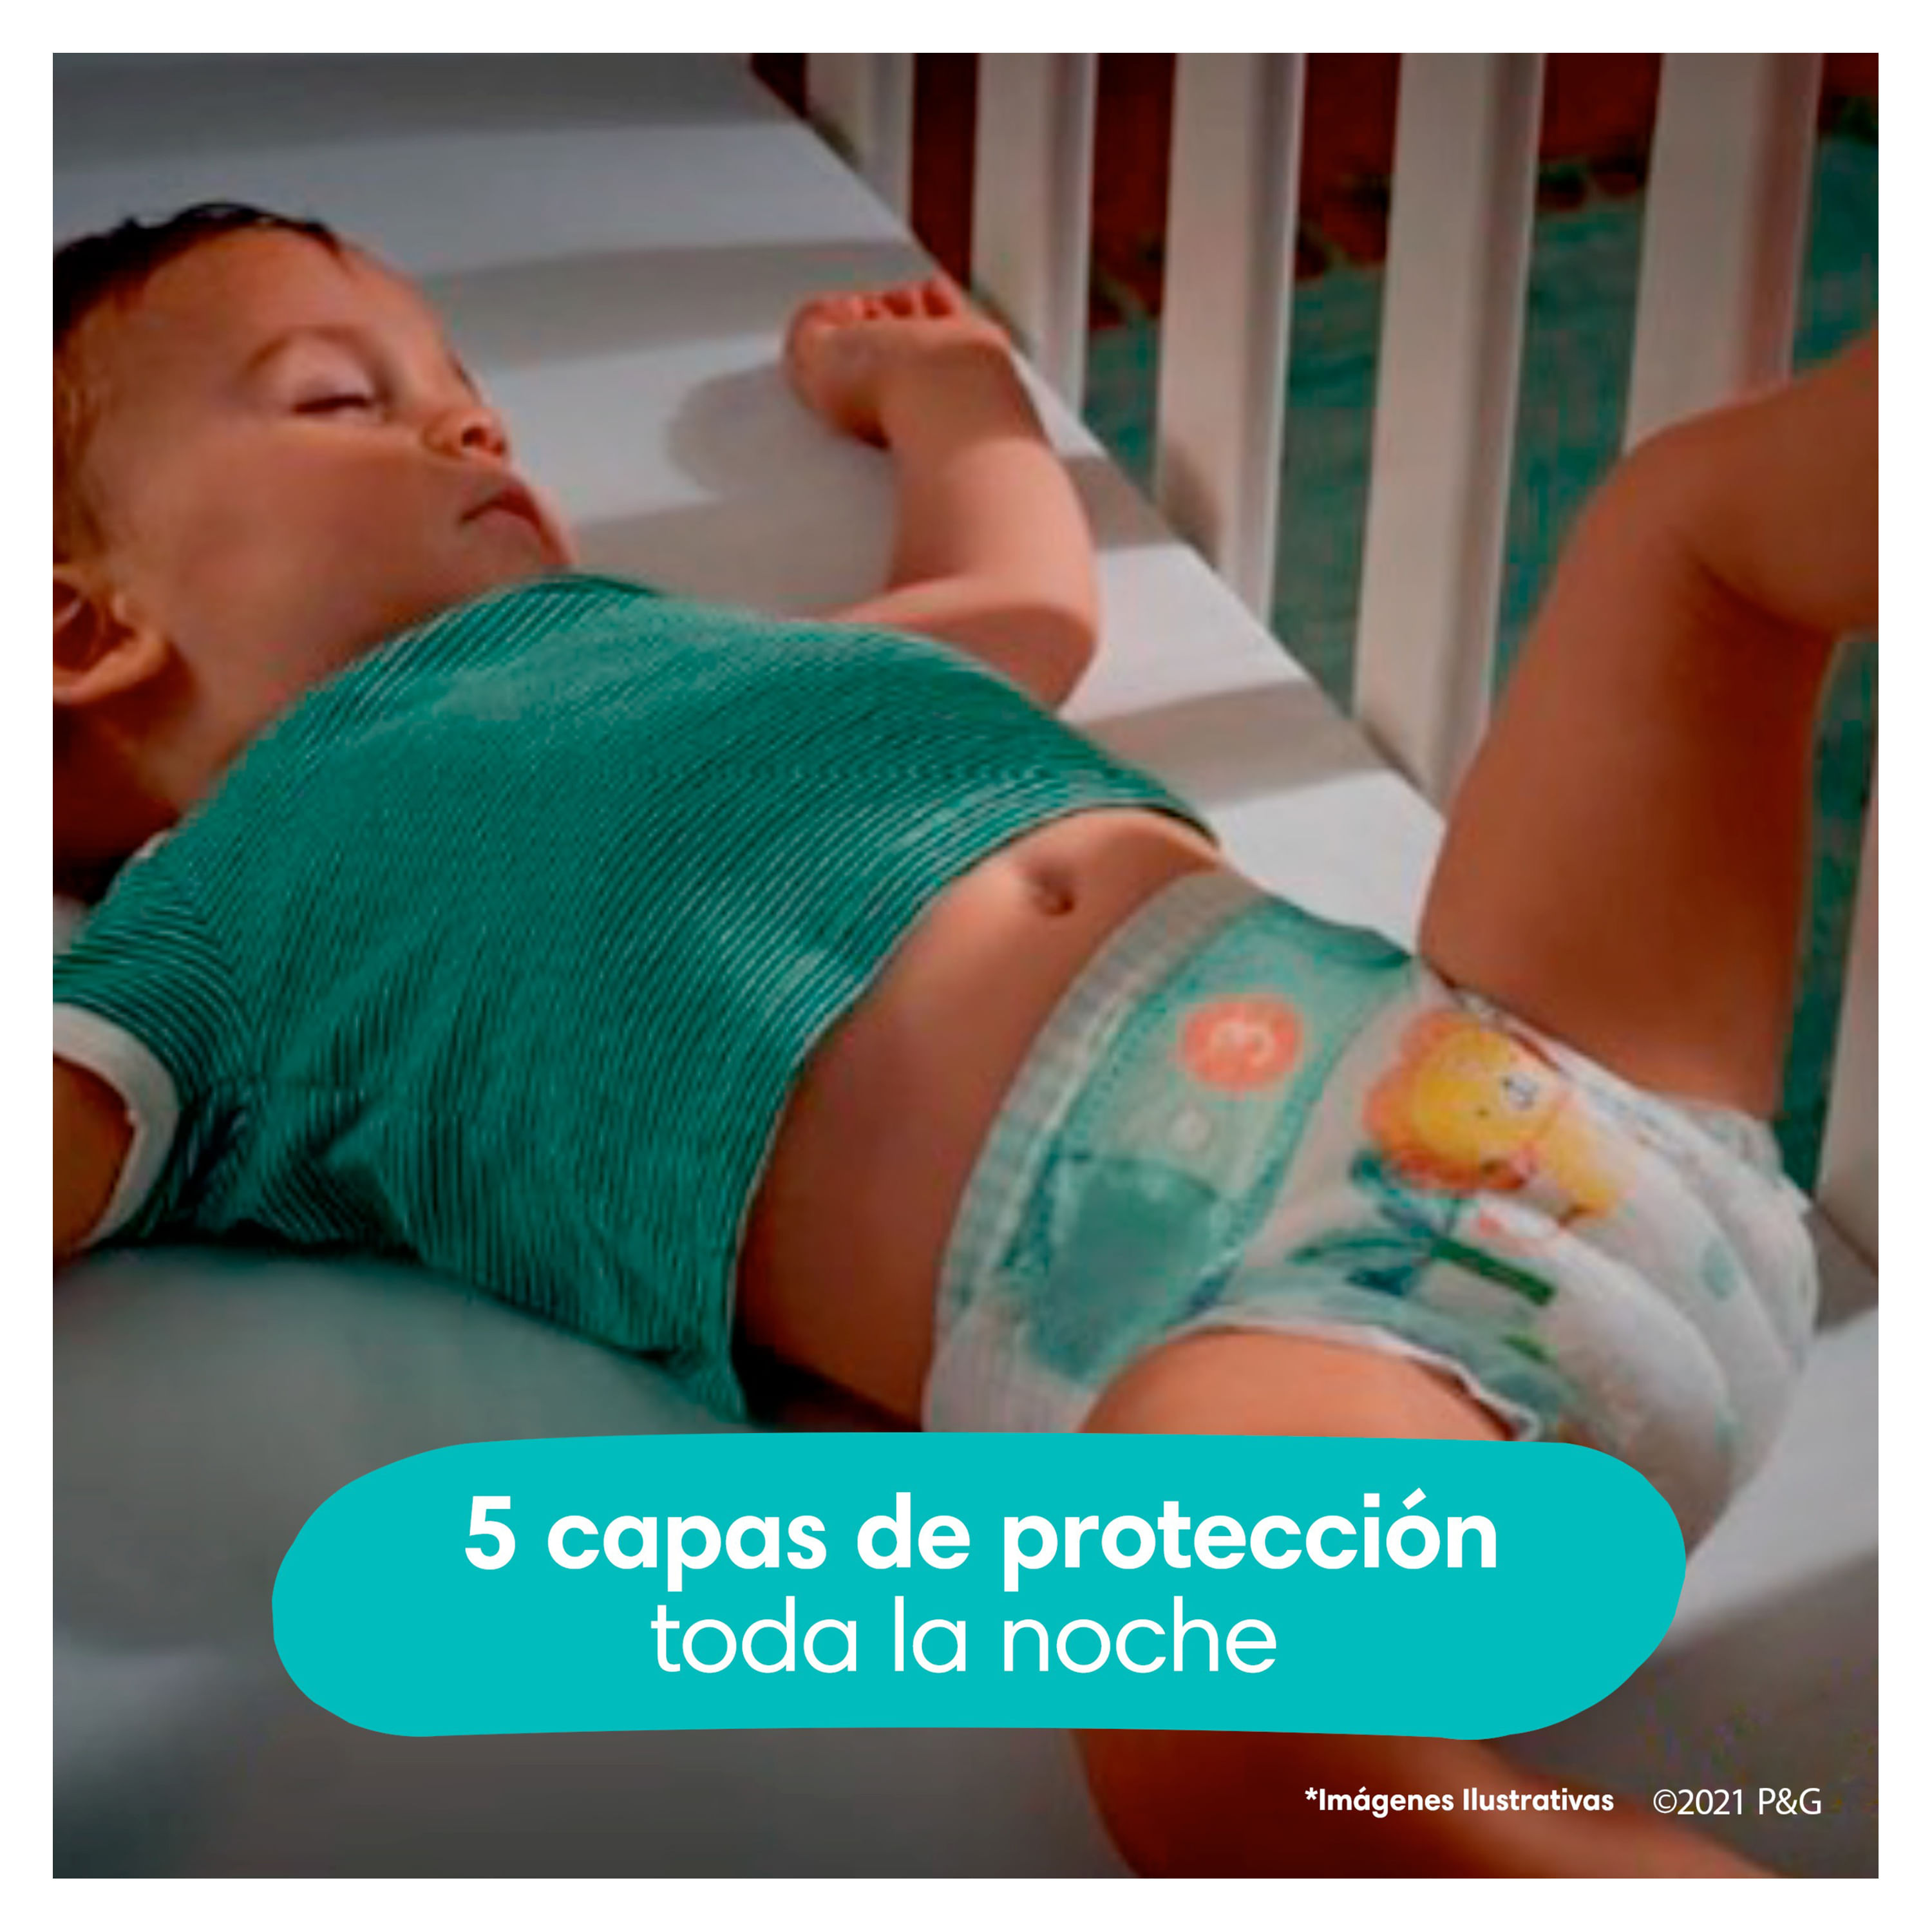 Comprar Pañales Pampers Baby-Dry Talla 6, 14kg -96uds, Walmart Costa Rica  - Maxi Palí